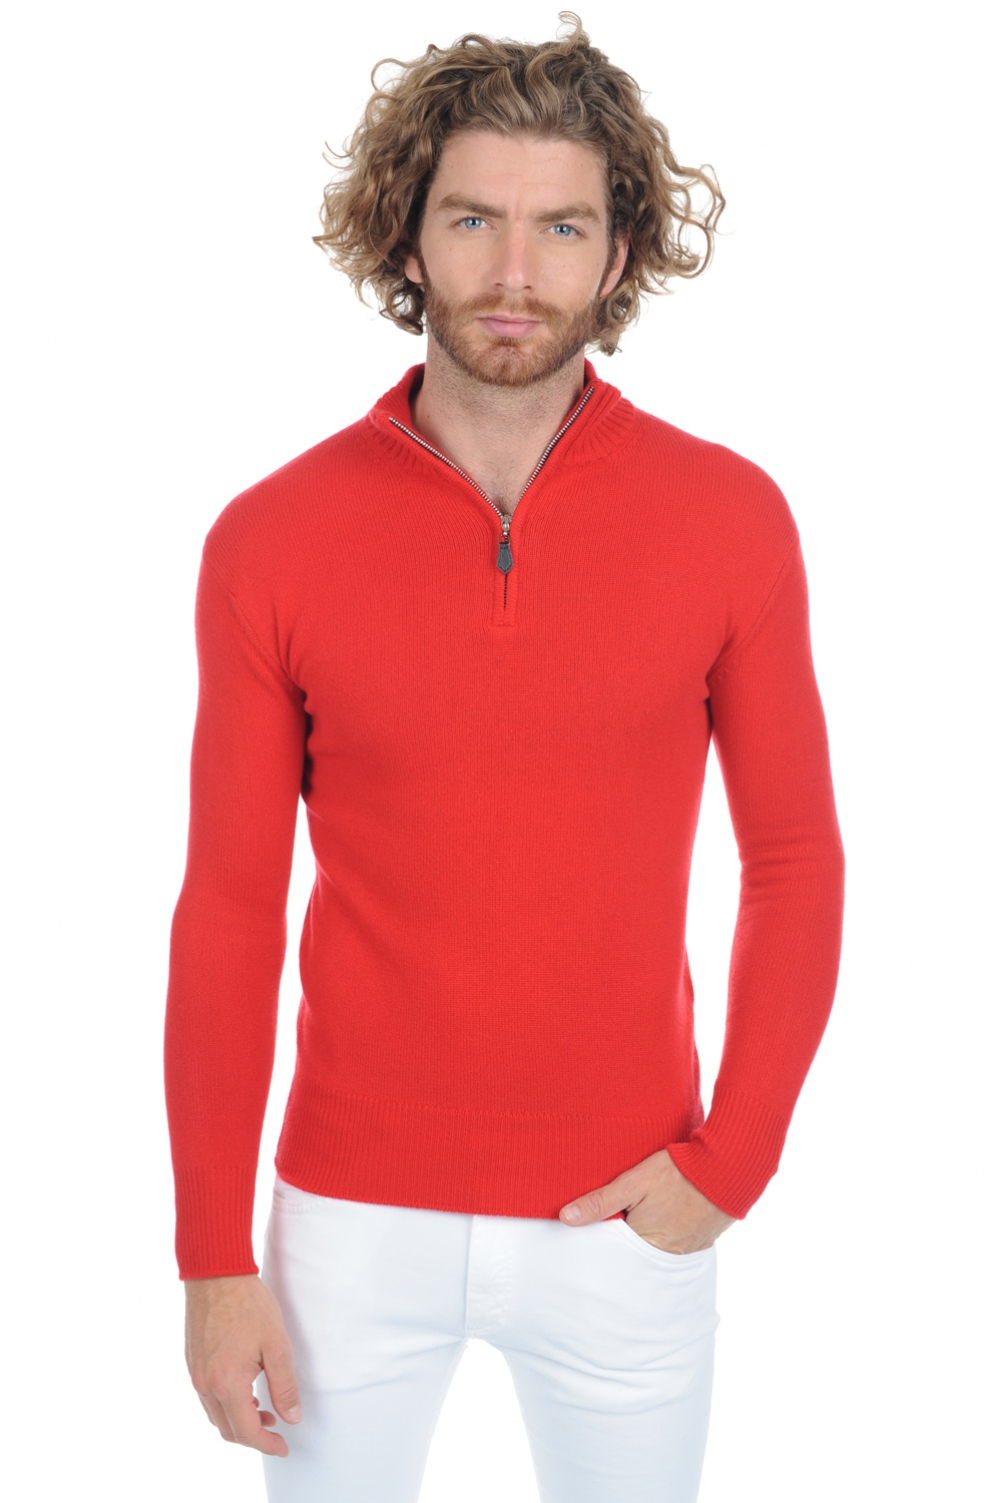 Cashmere men polo style sweaters donovan premium tango red xs